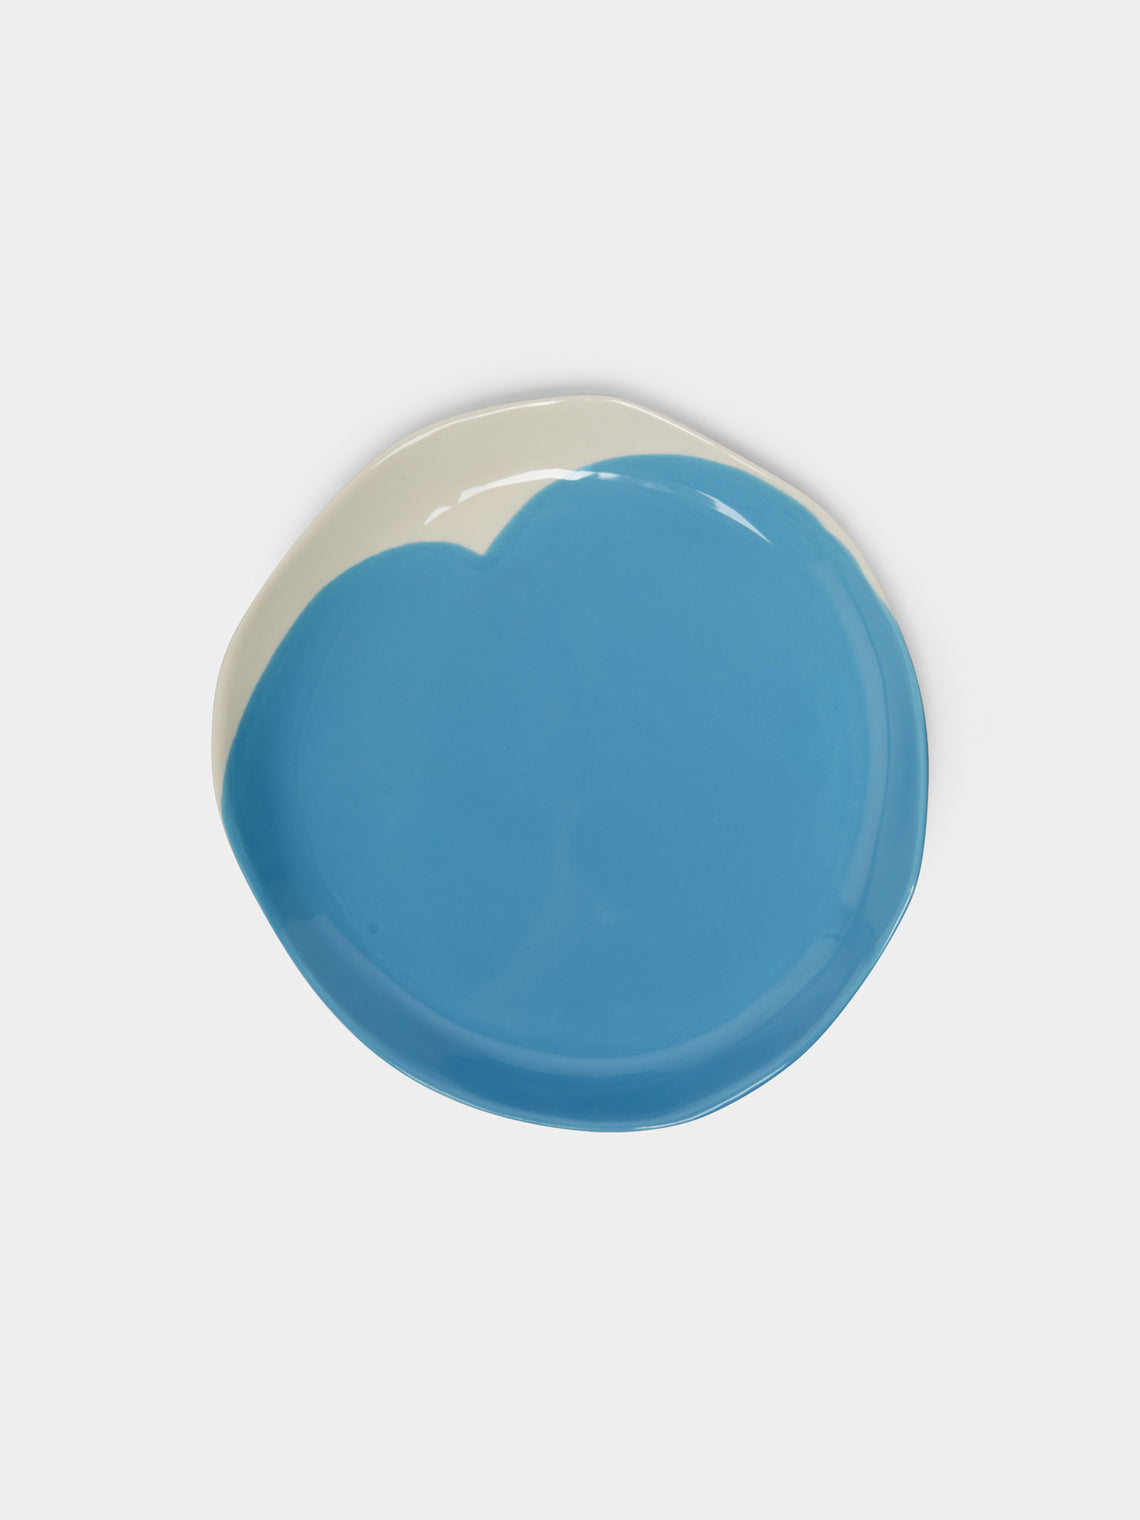 Pottery & Poetry - Hand-Glazed Porcelain Side Plates (Set of 4) - Light Blue - ABASK - 